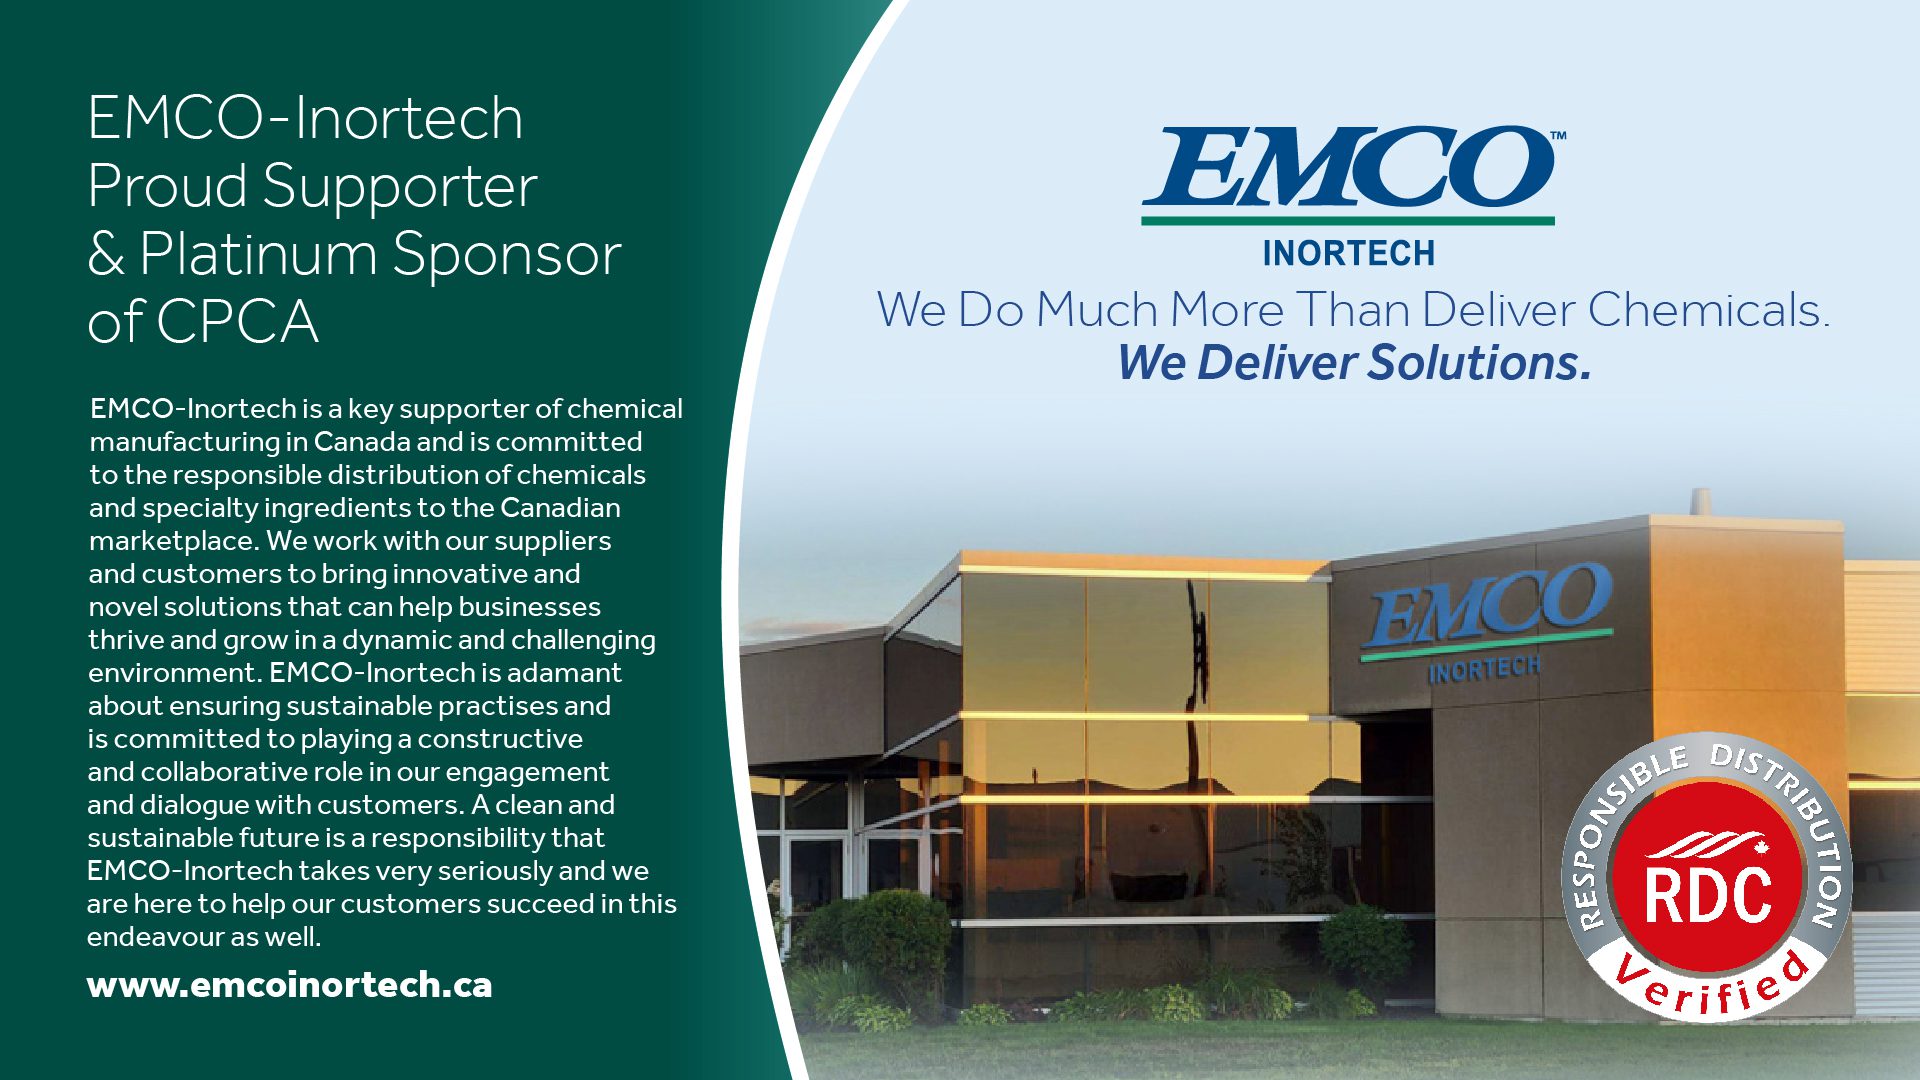 EMCO_Inortech——我们提供解决方案